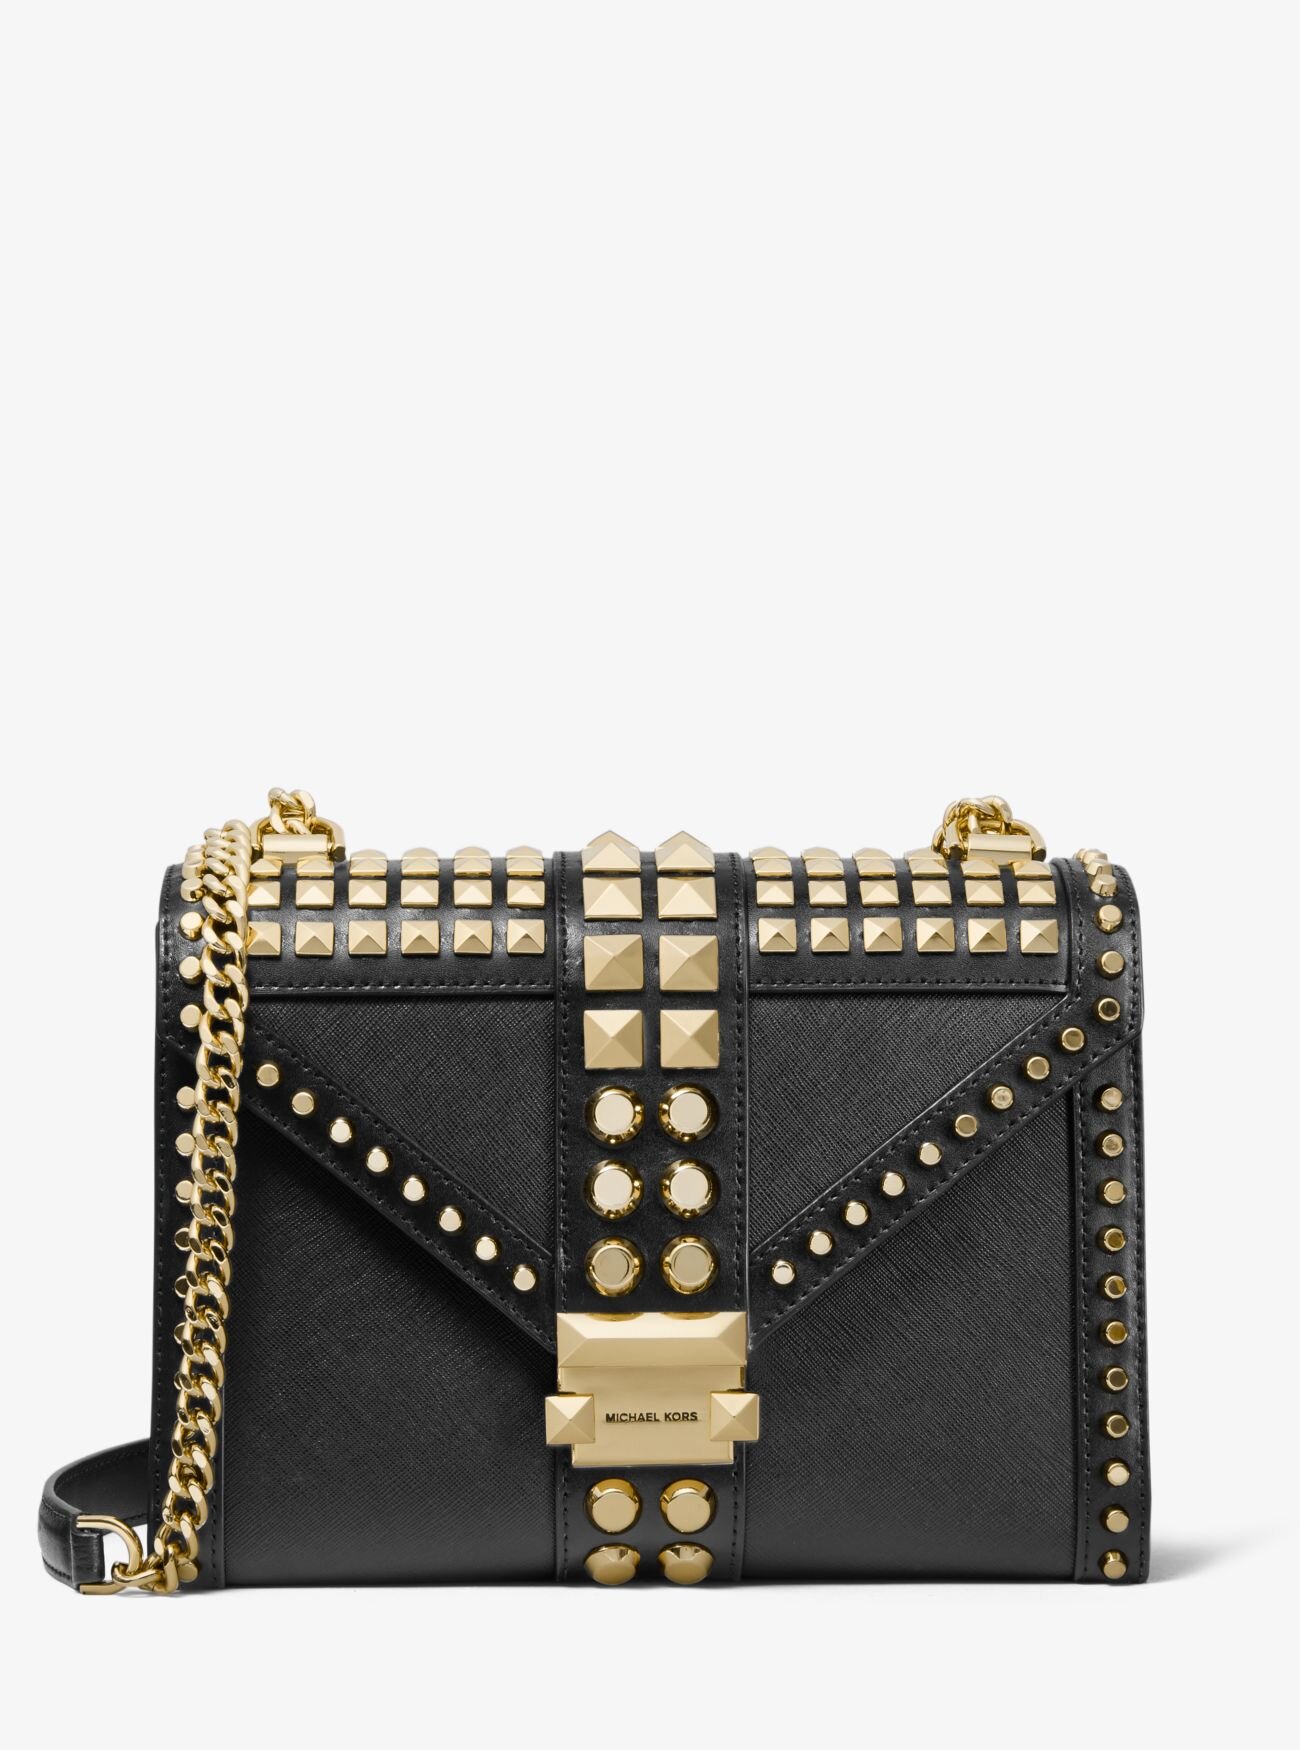 michael kors black gold studded purse